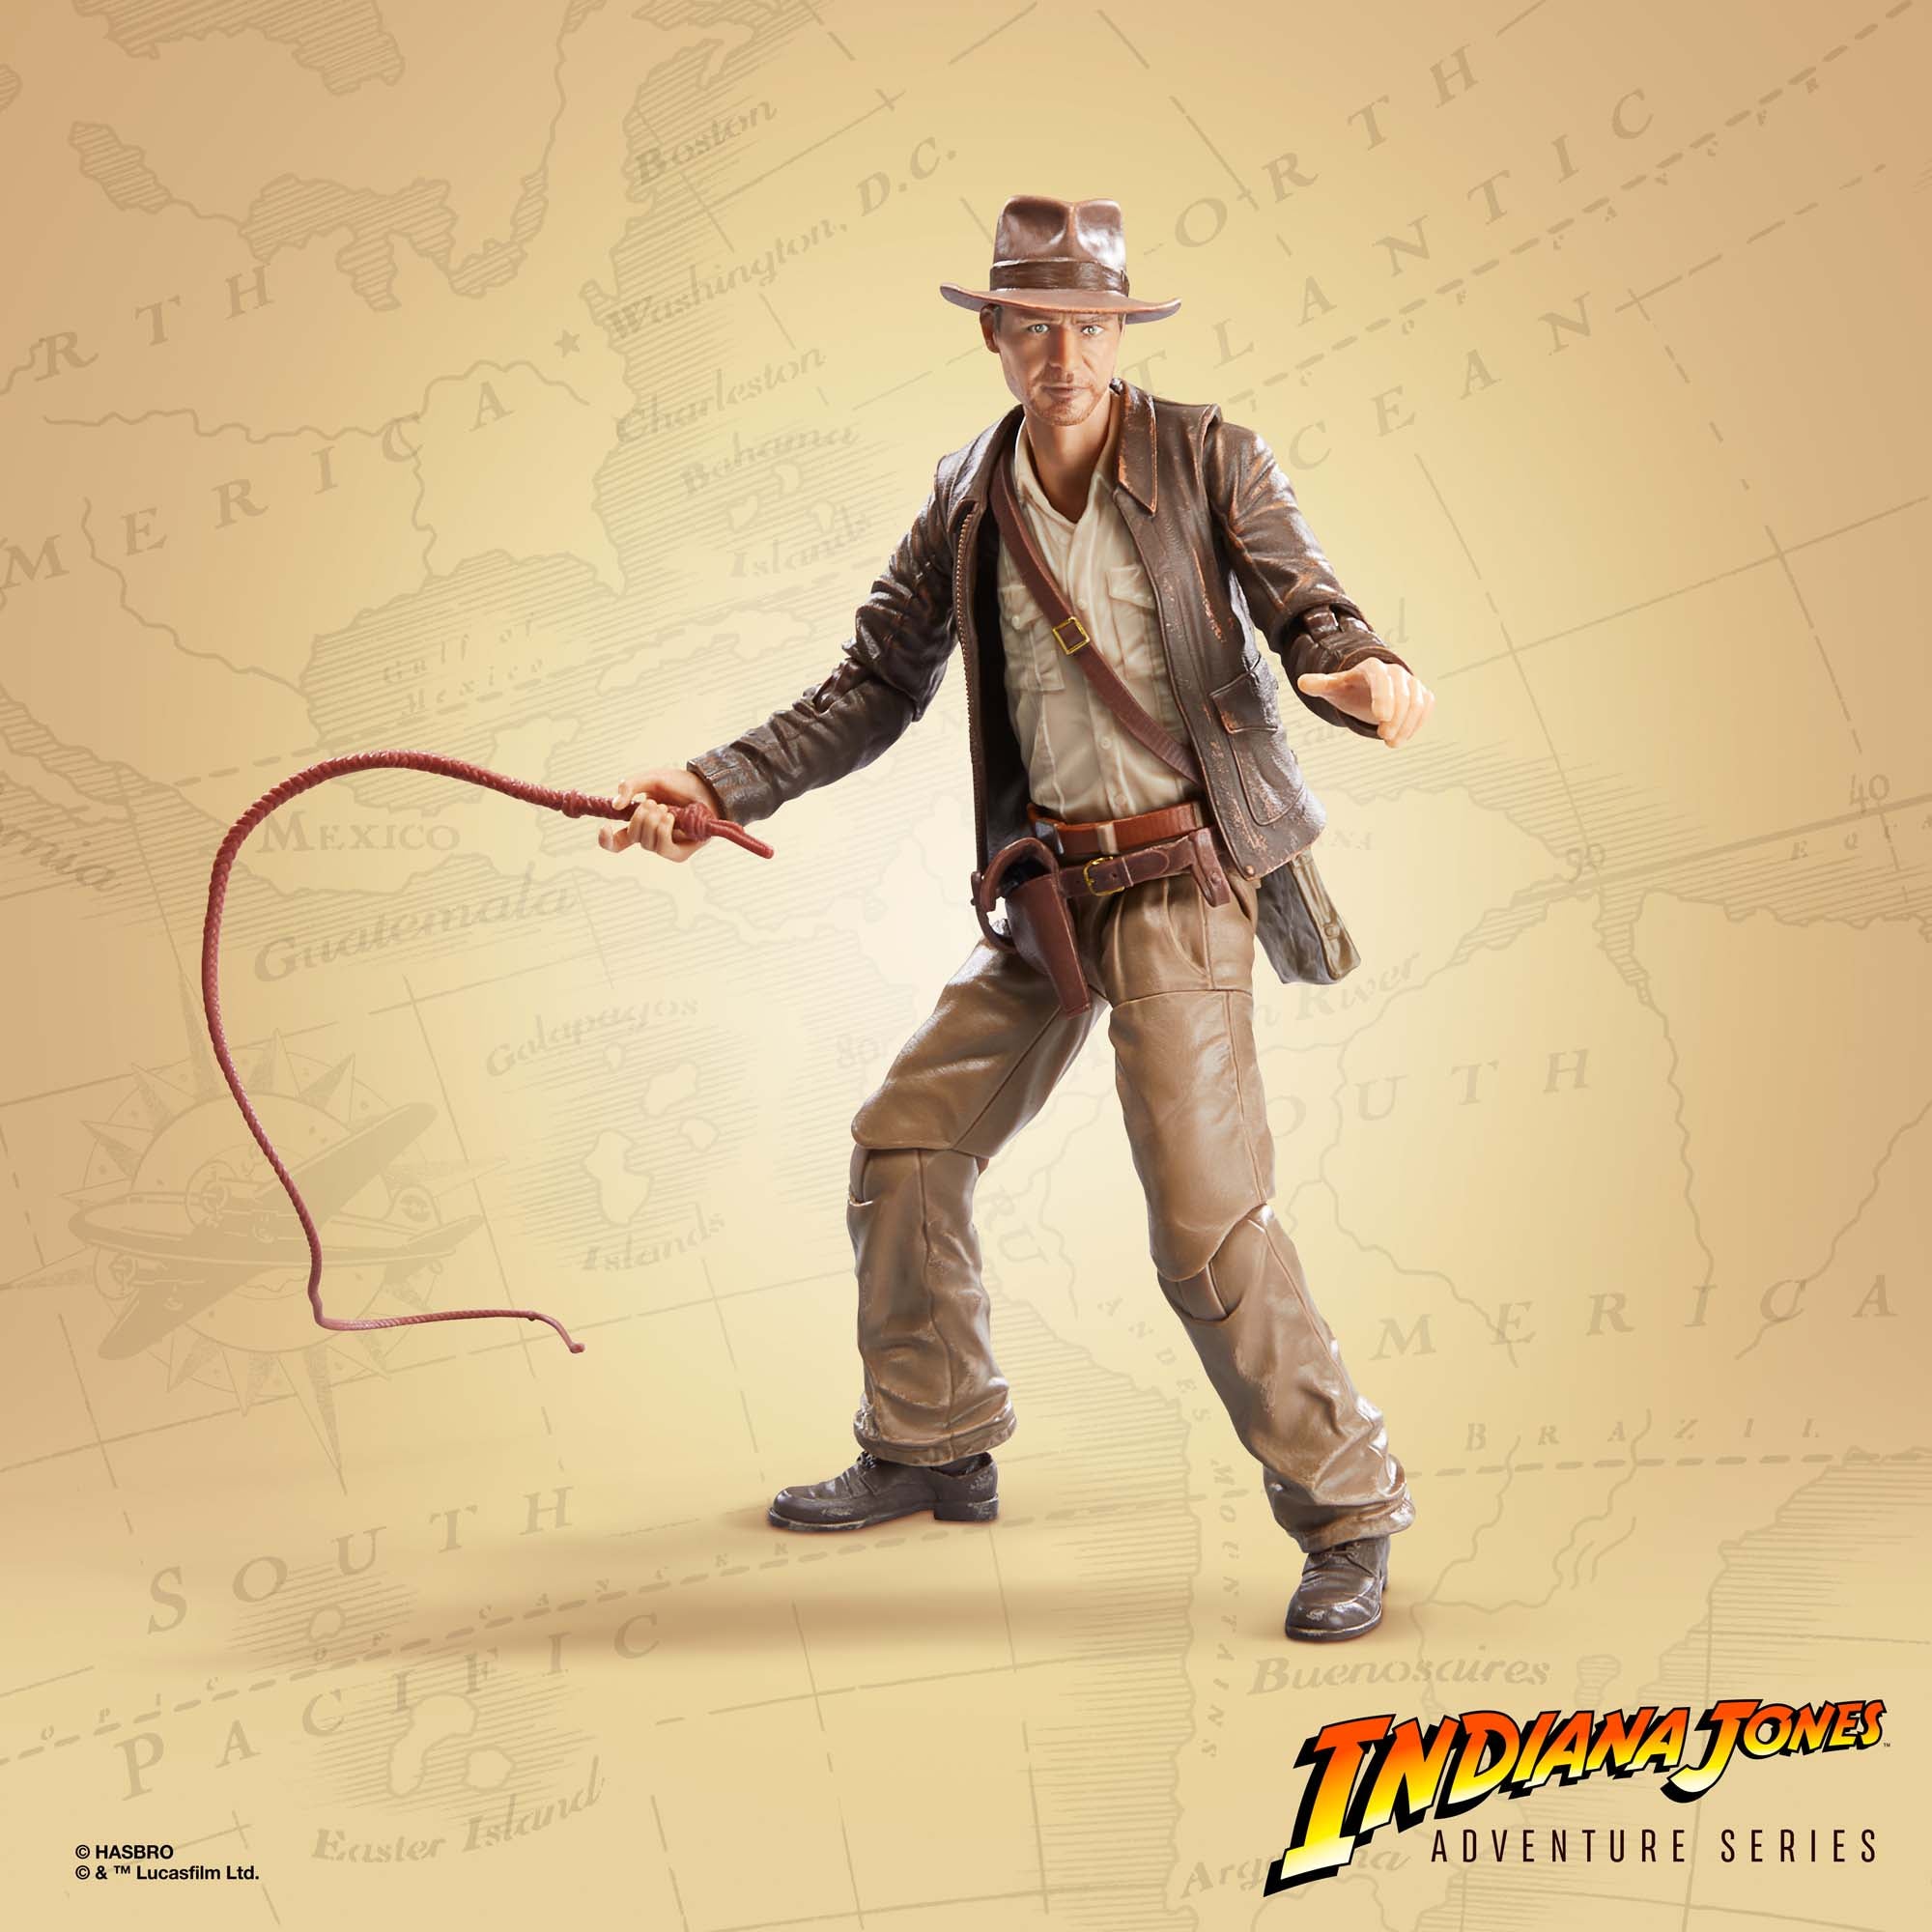 Indiana Jones and the Last Hurrah - Hasbro 2008 Action Figure Retrospective  